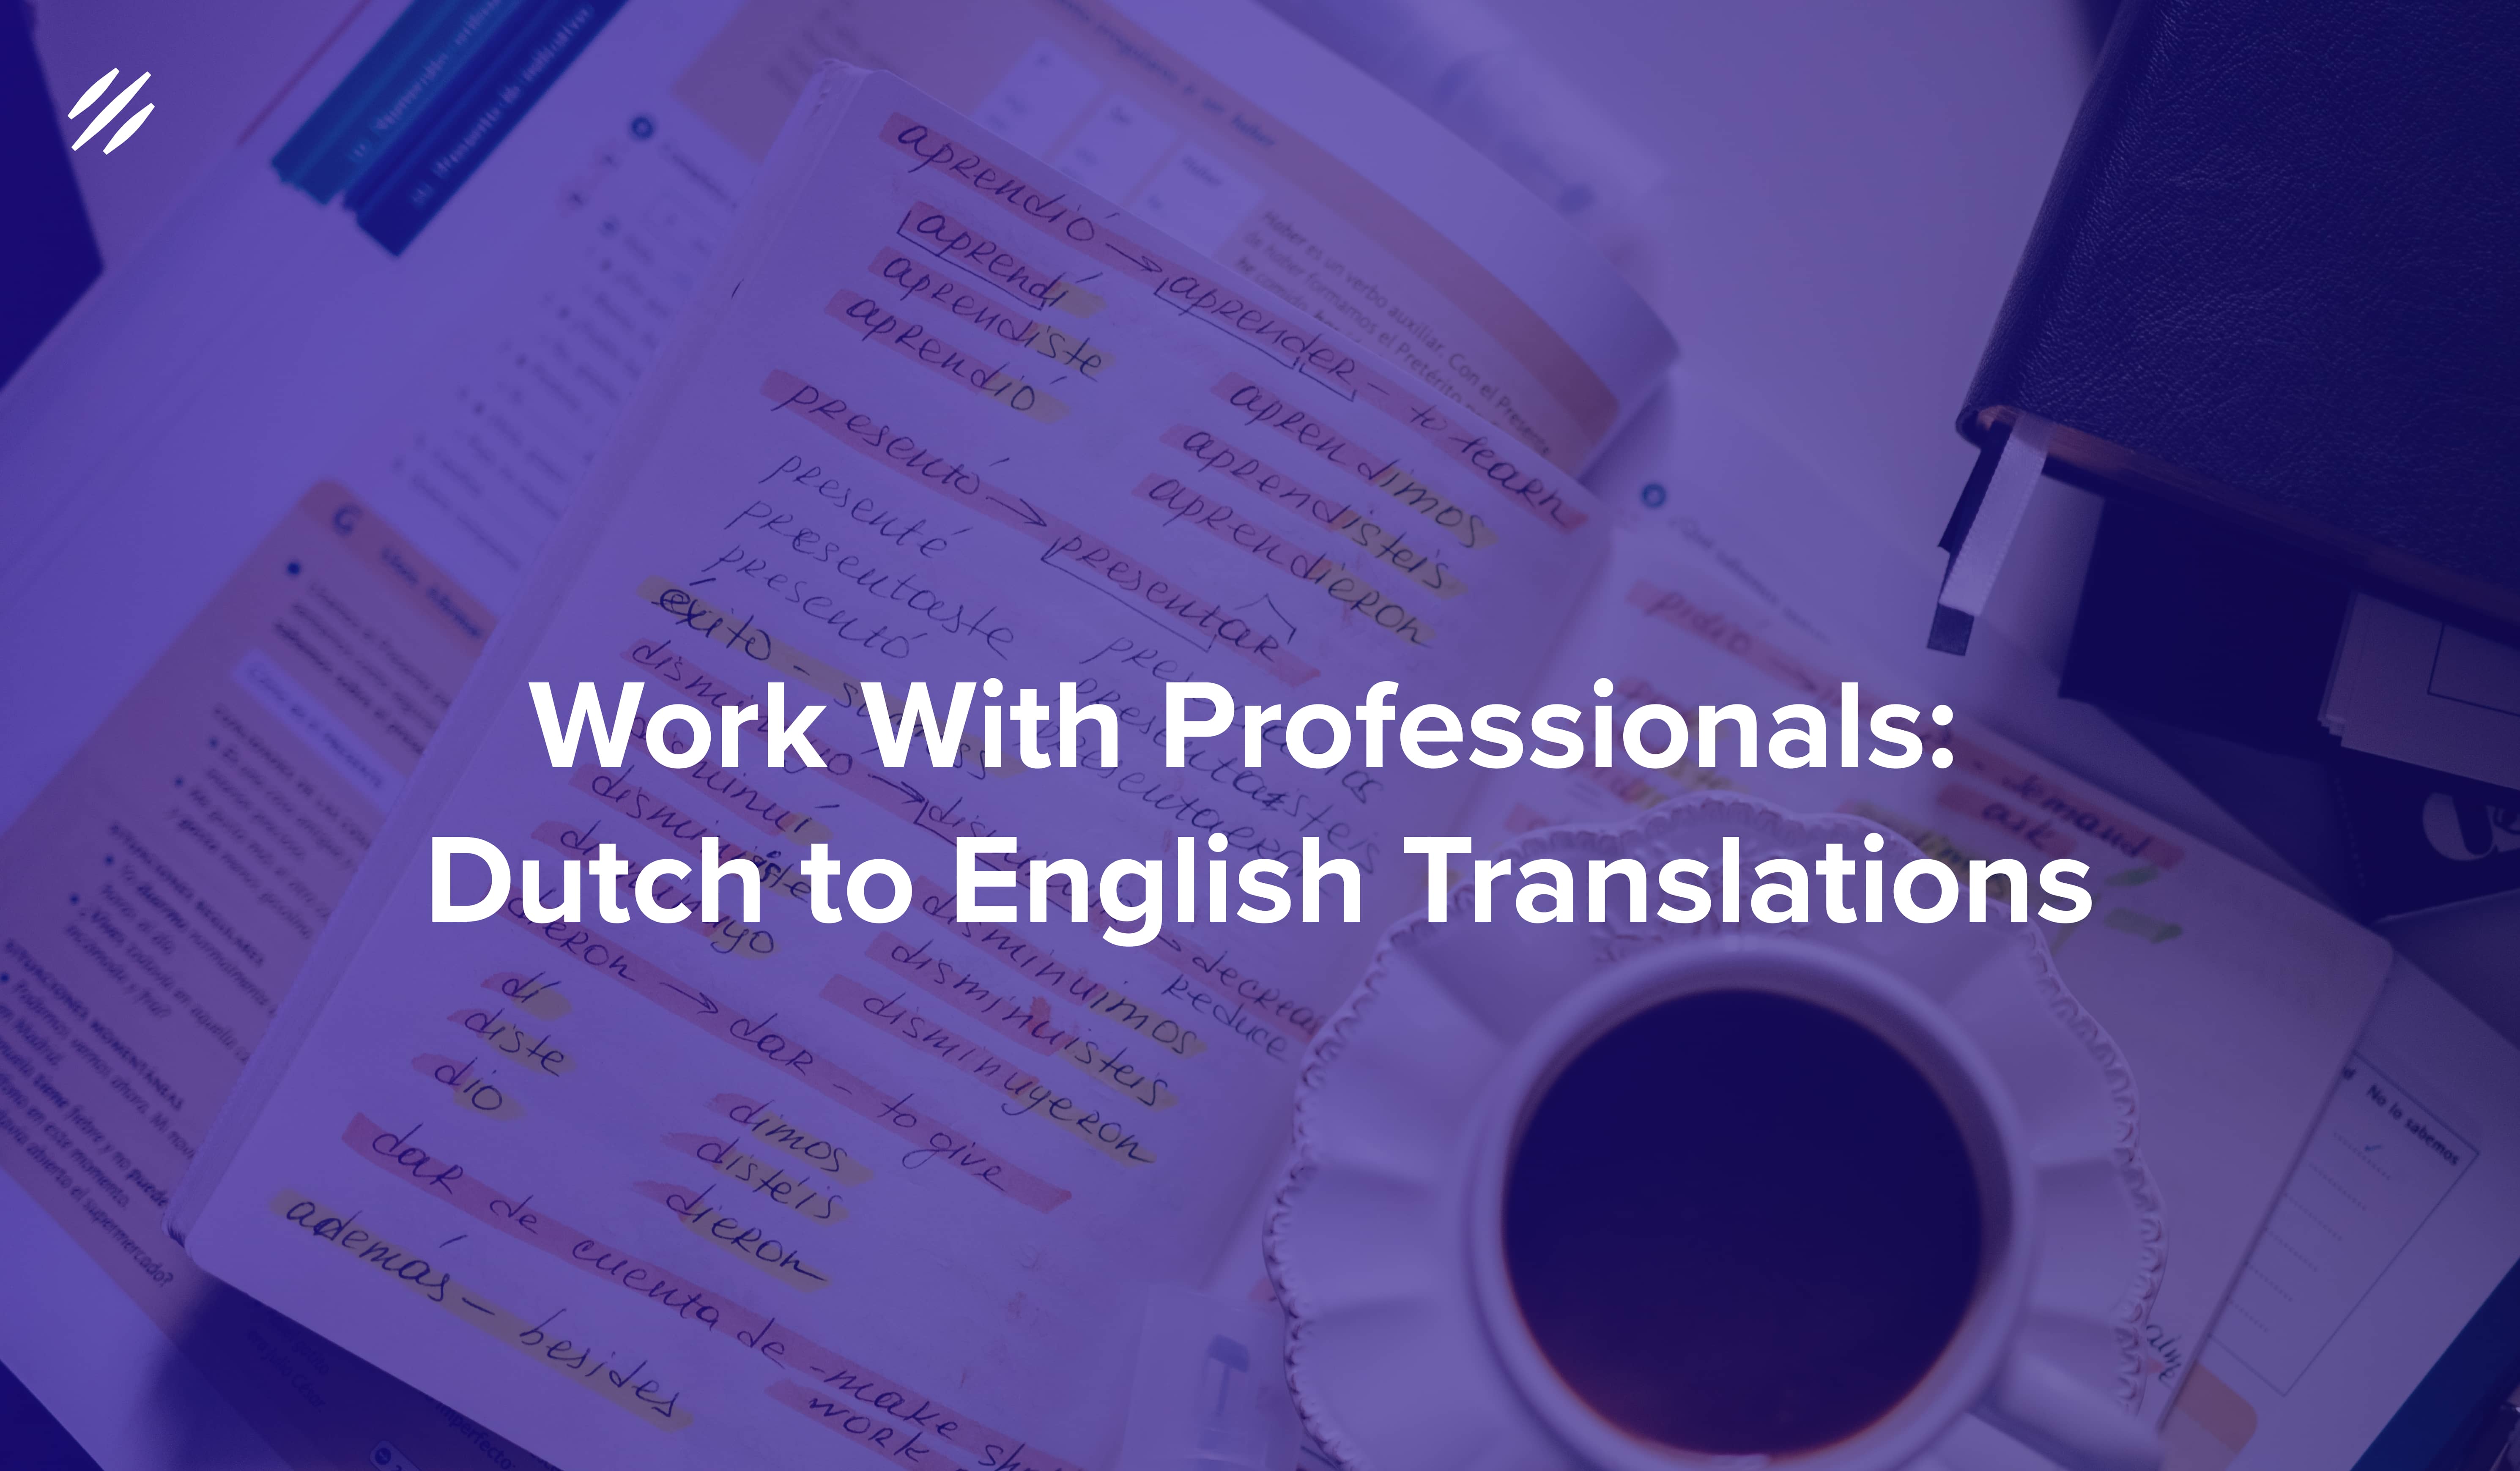 Dutch to English Translation: Avoid Online Translators, Work With Professionals